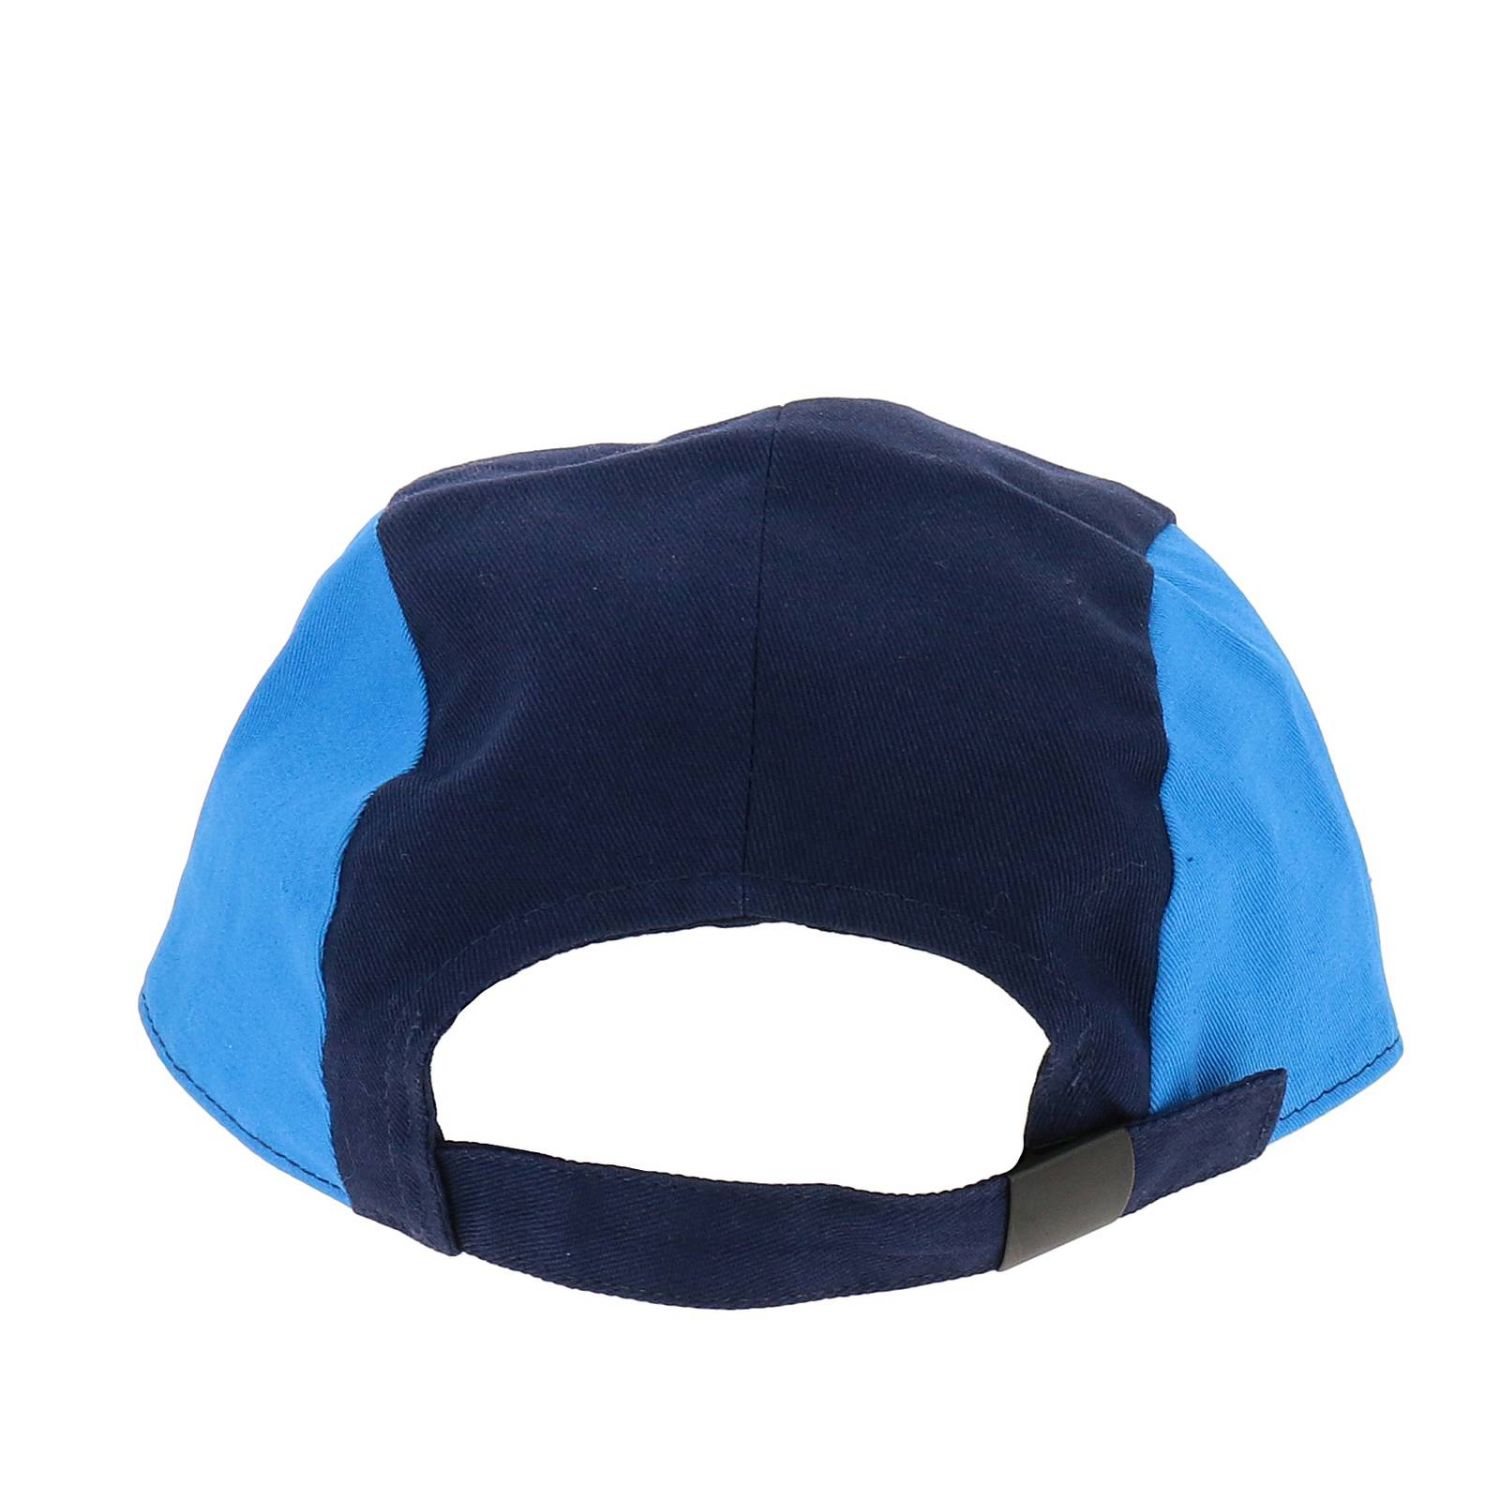 Kenzo Junior Outlet: hat for kids - Blue | Kenzo Junior hat KN90538 ...